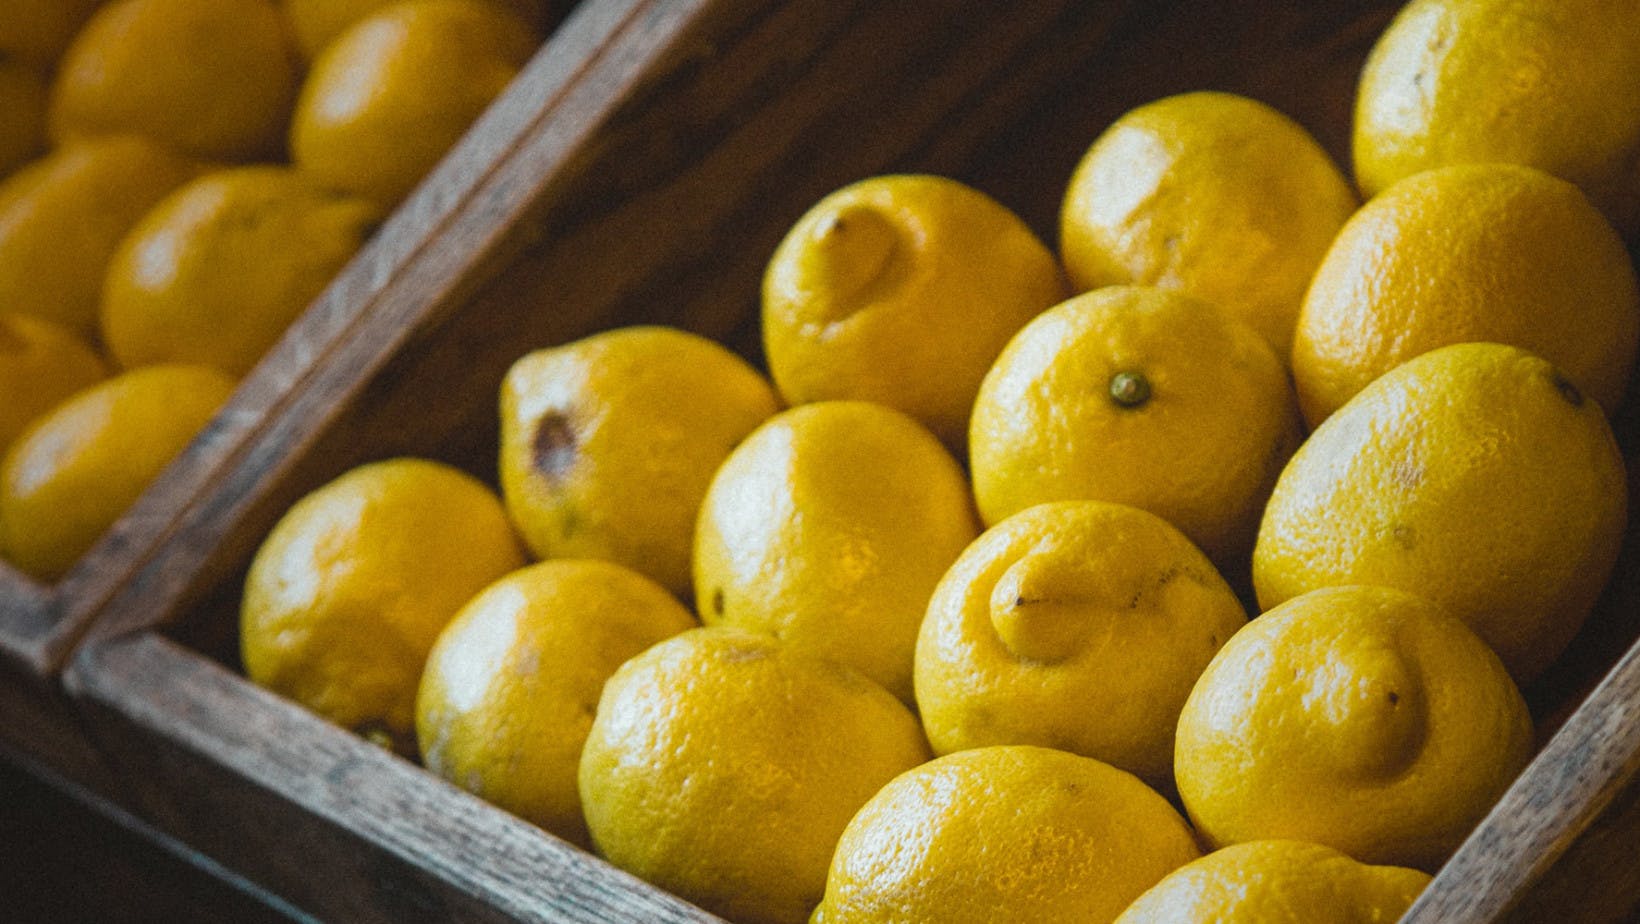 Lemons on a wooden market shelf representing quantity demanded